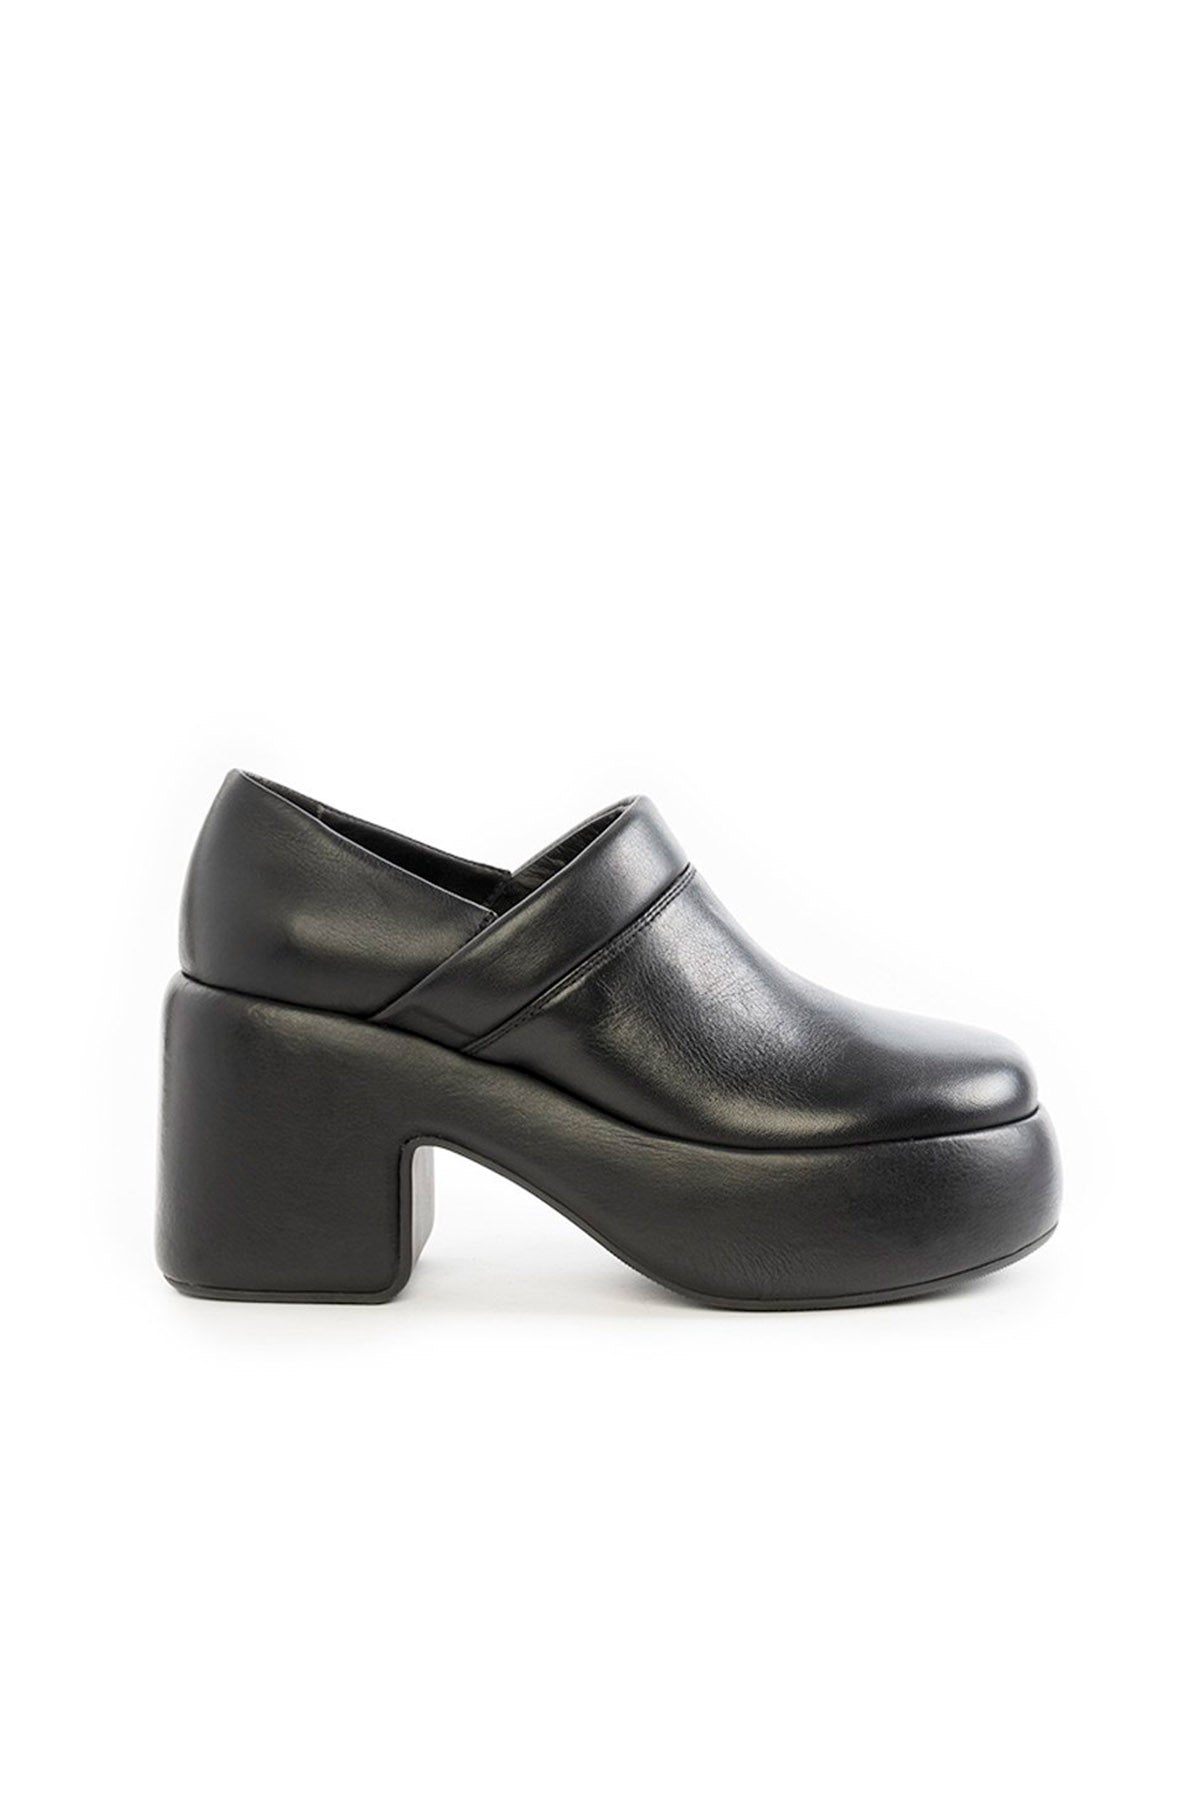 Vic Matie Topuklu Deri Ayakkabı-Libas Trendy Fashion Store